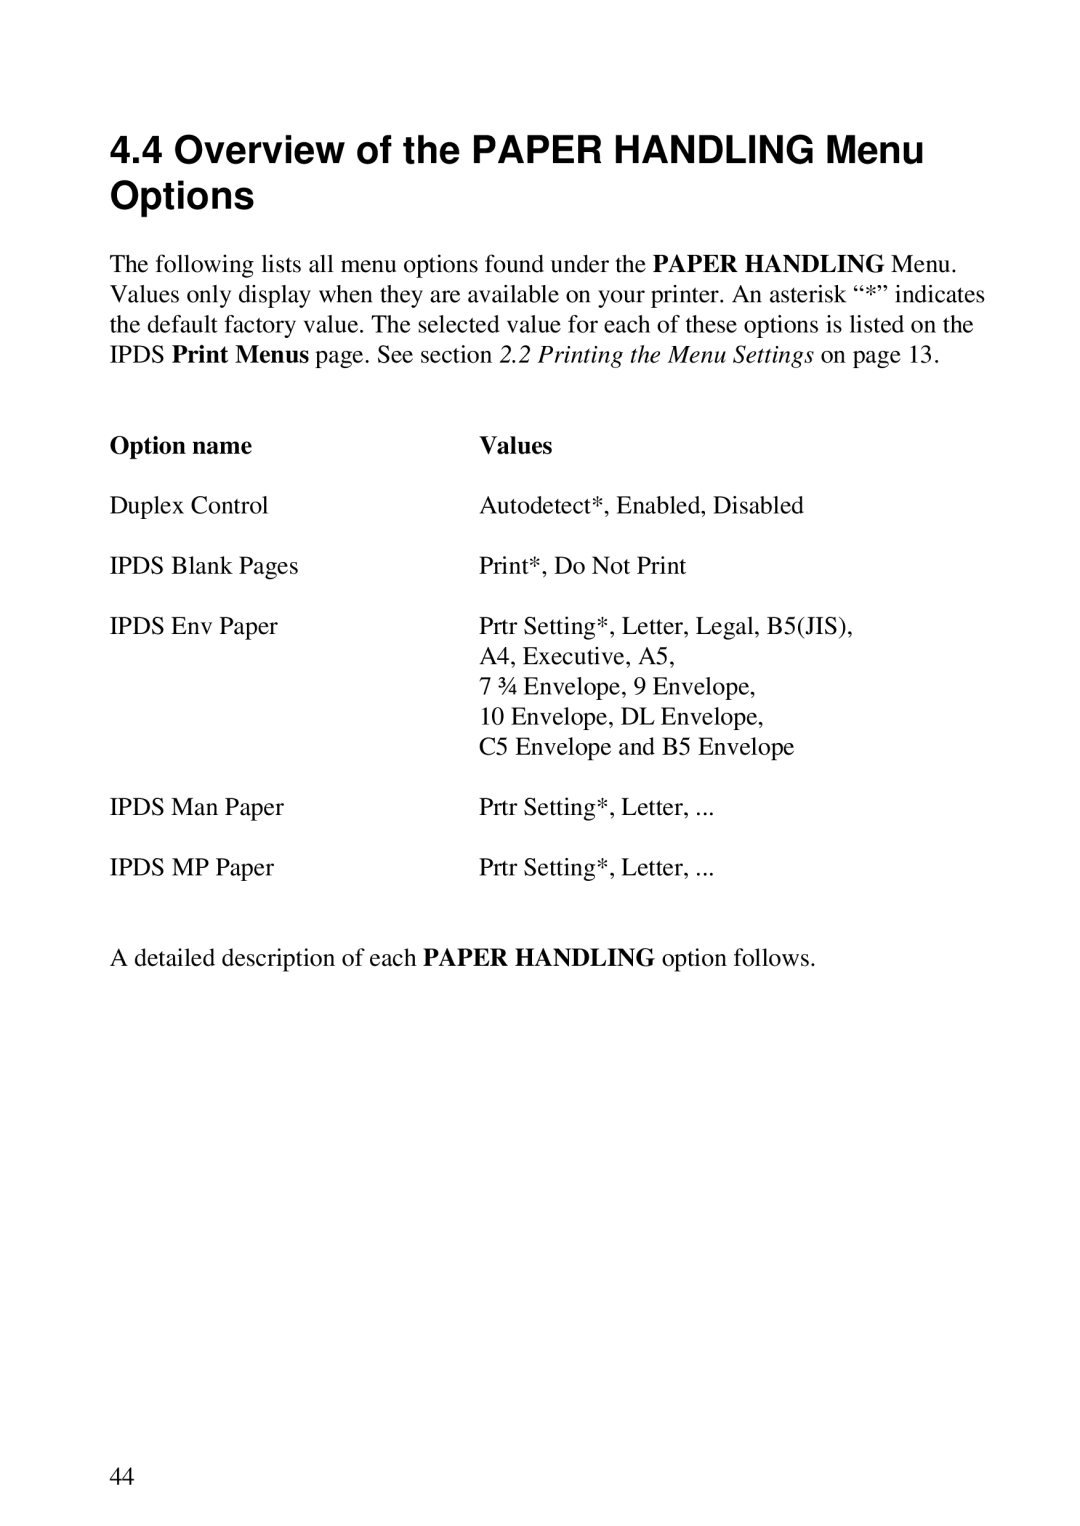 Lexmark K 1220, Se 3455 manual Overview of the Paper Handling Menu Options, Option name Values 